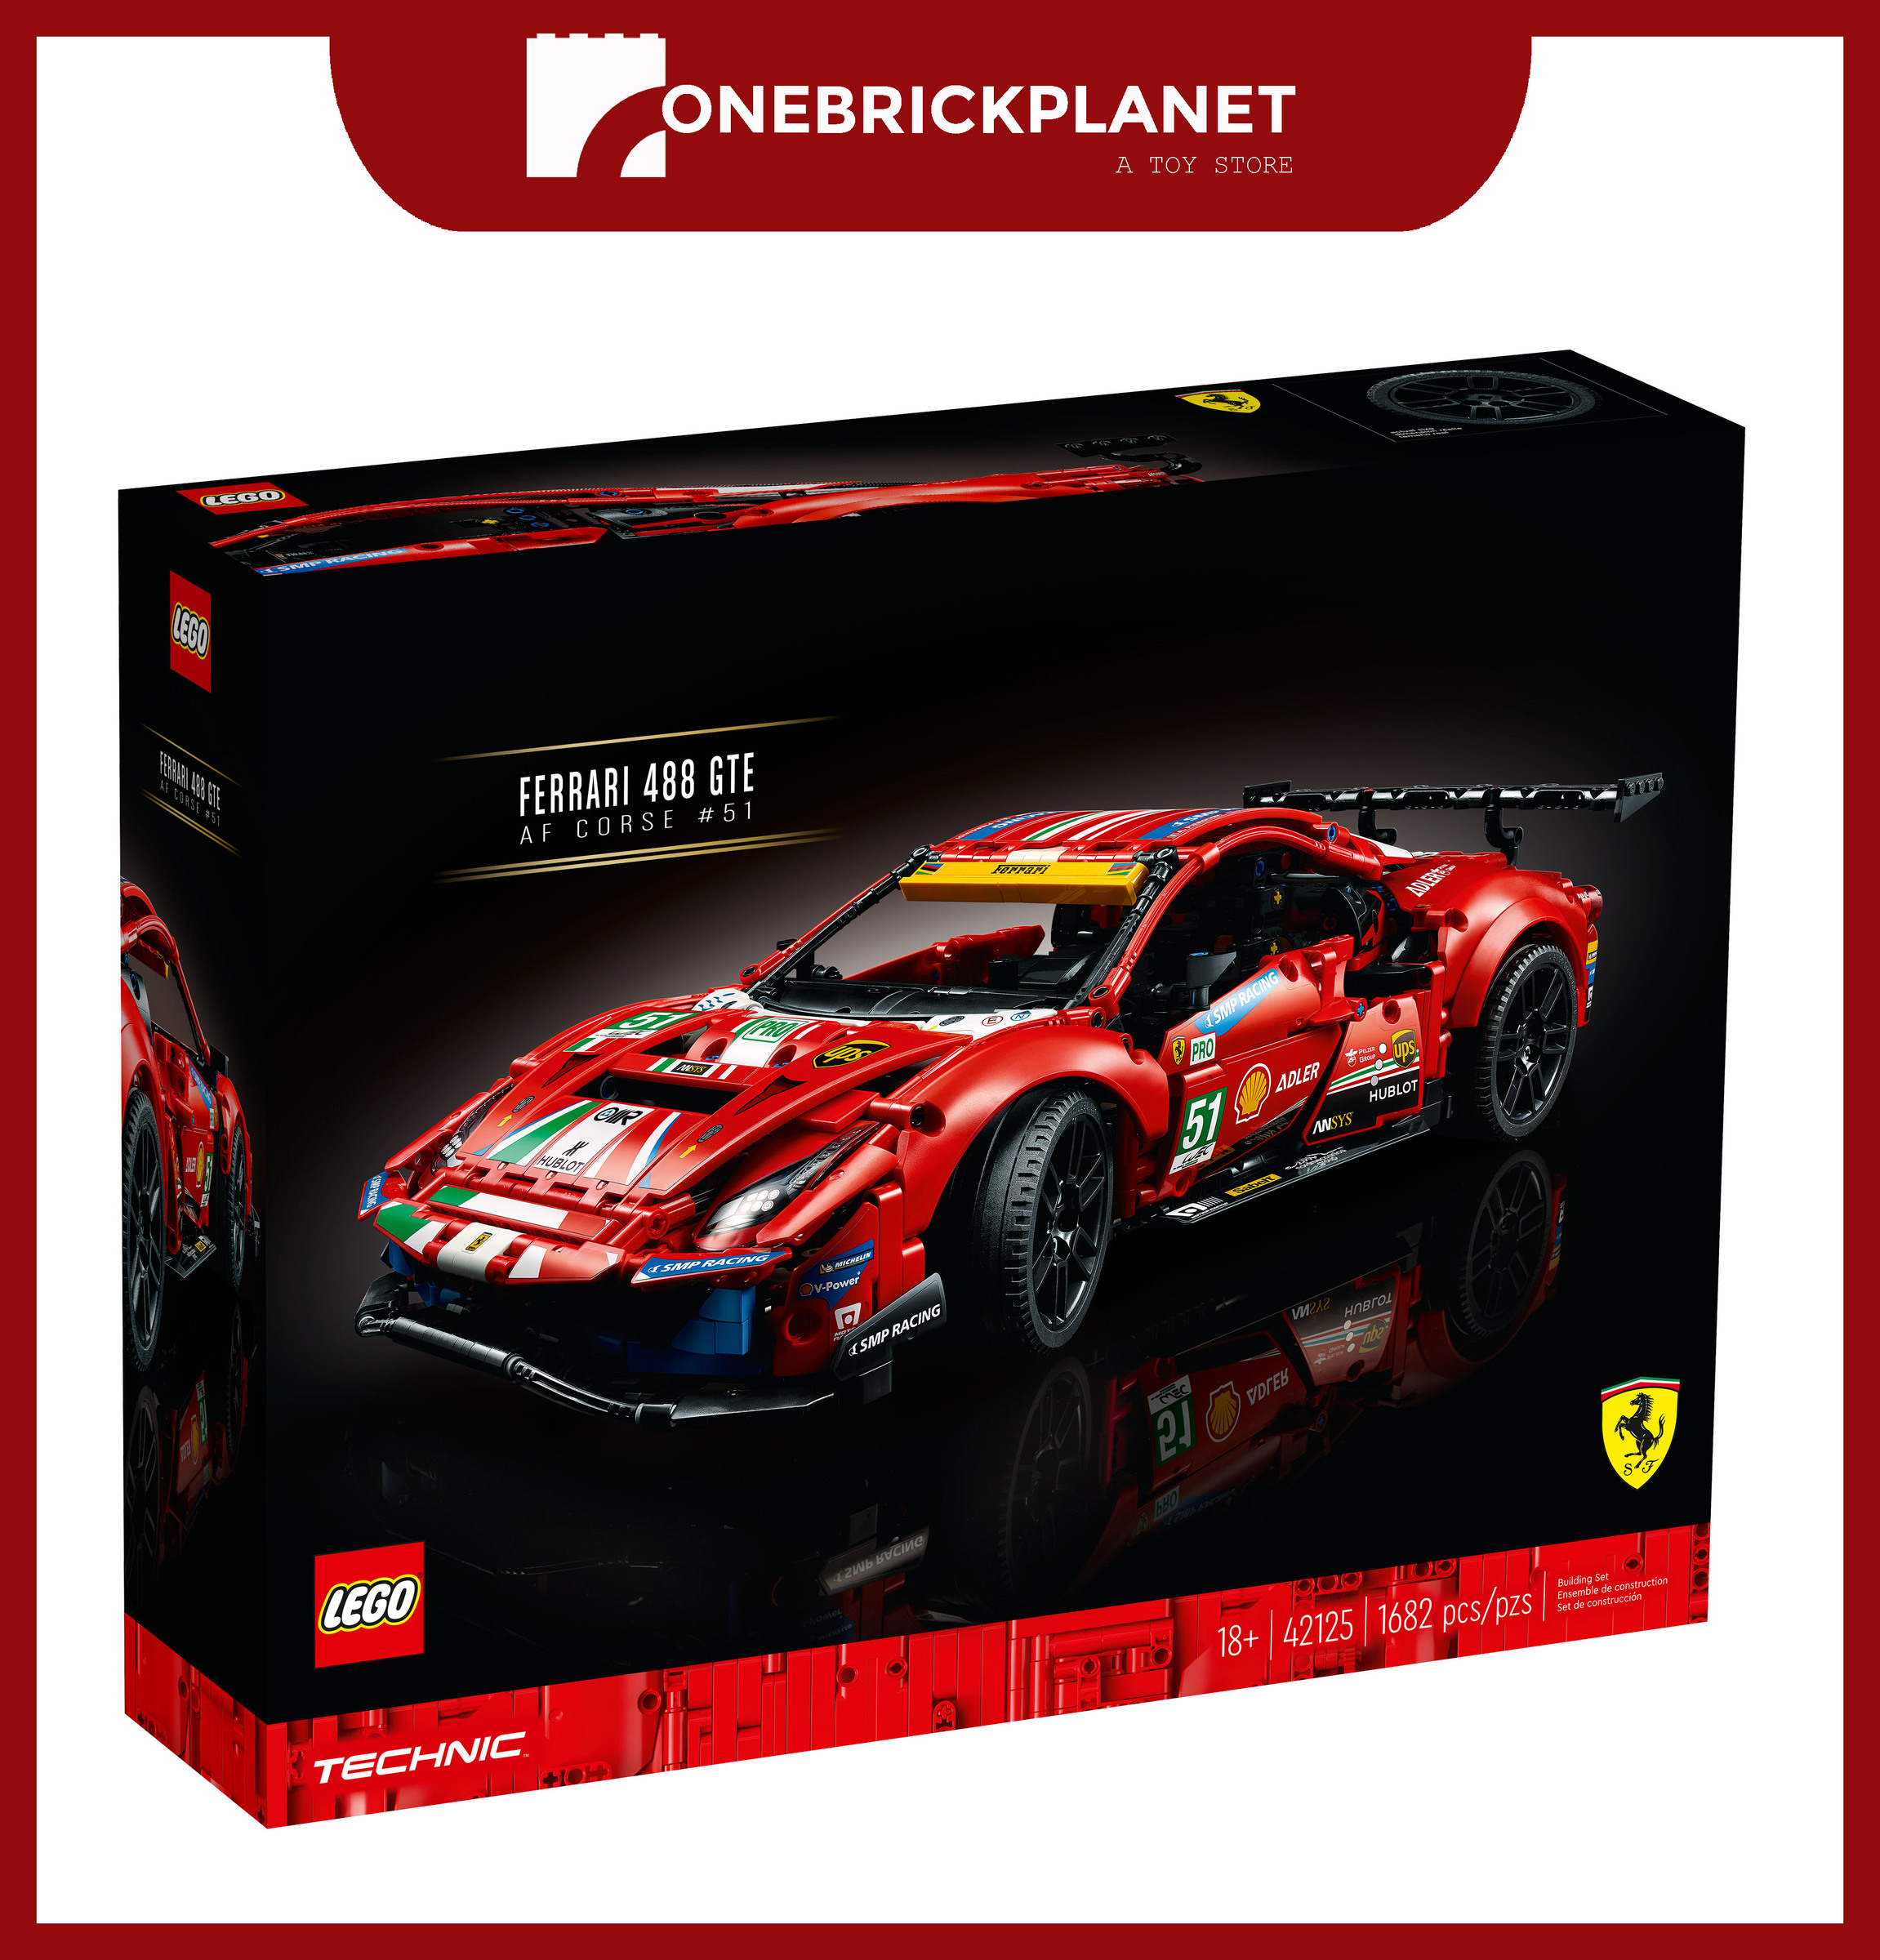 LEGO® Technic 42125 Ferrari 488 GTE “AF Corse #51”, Construction